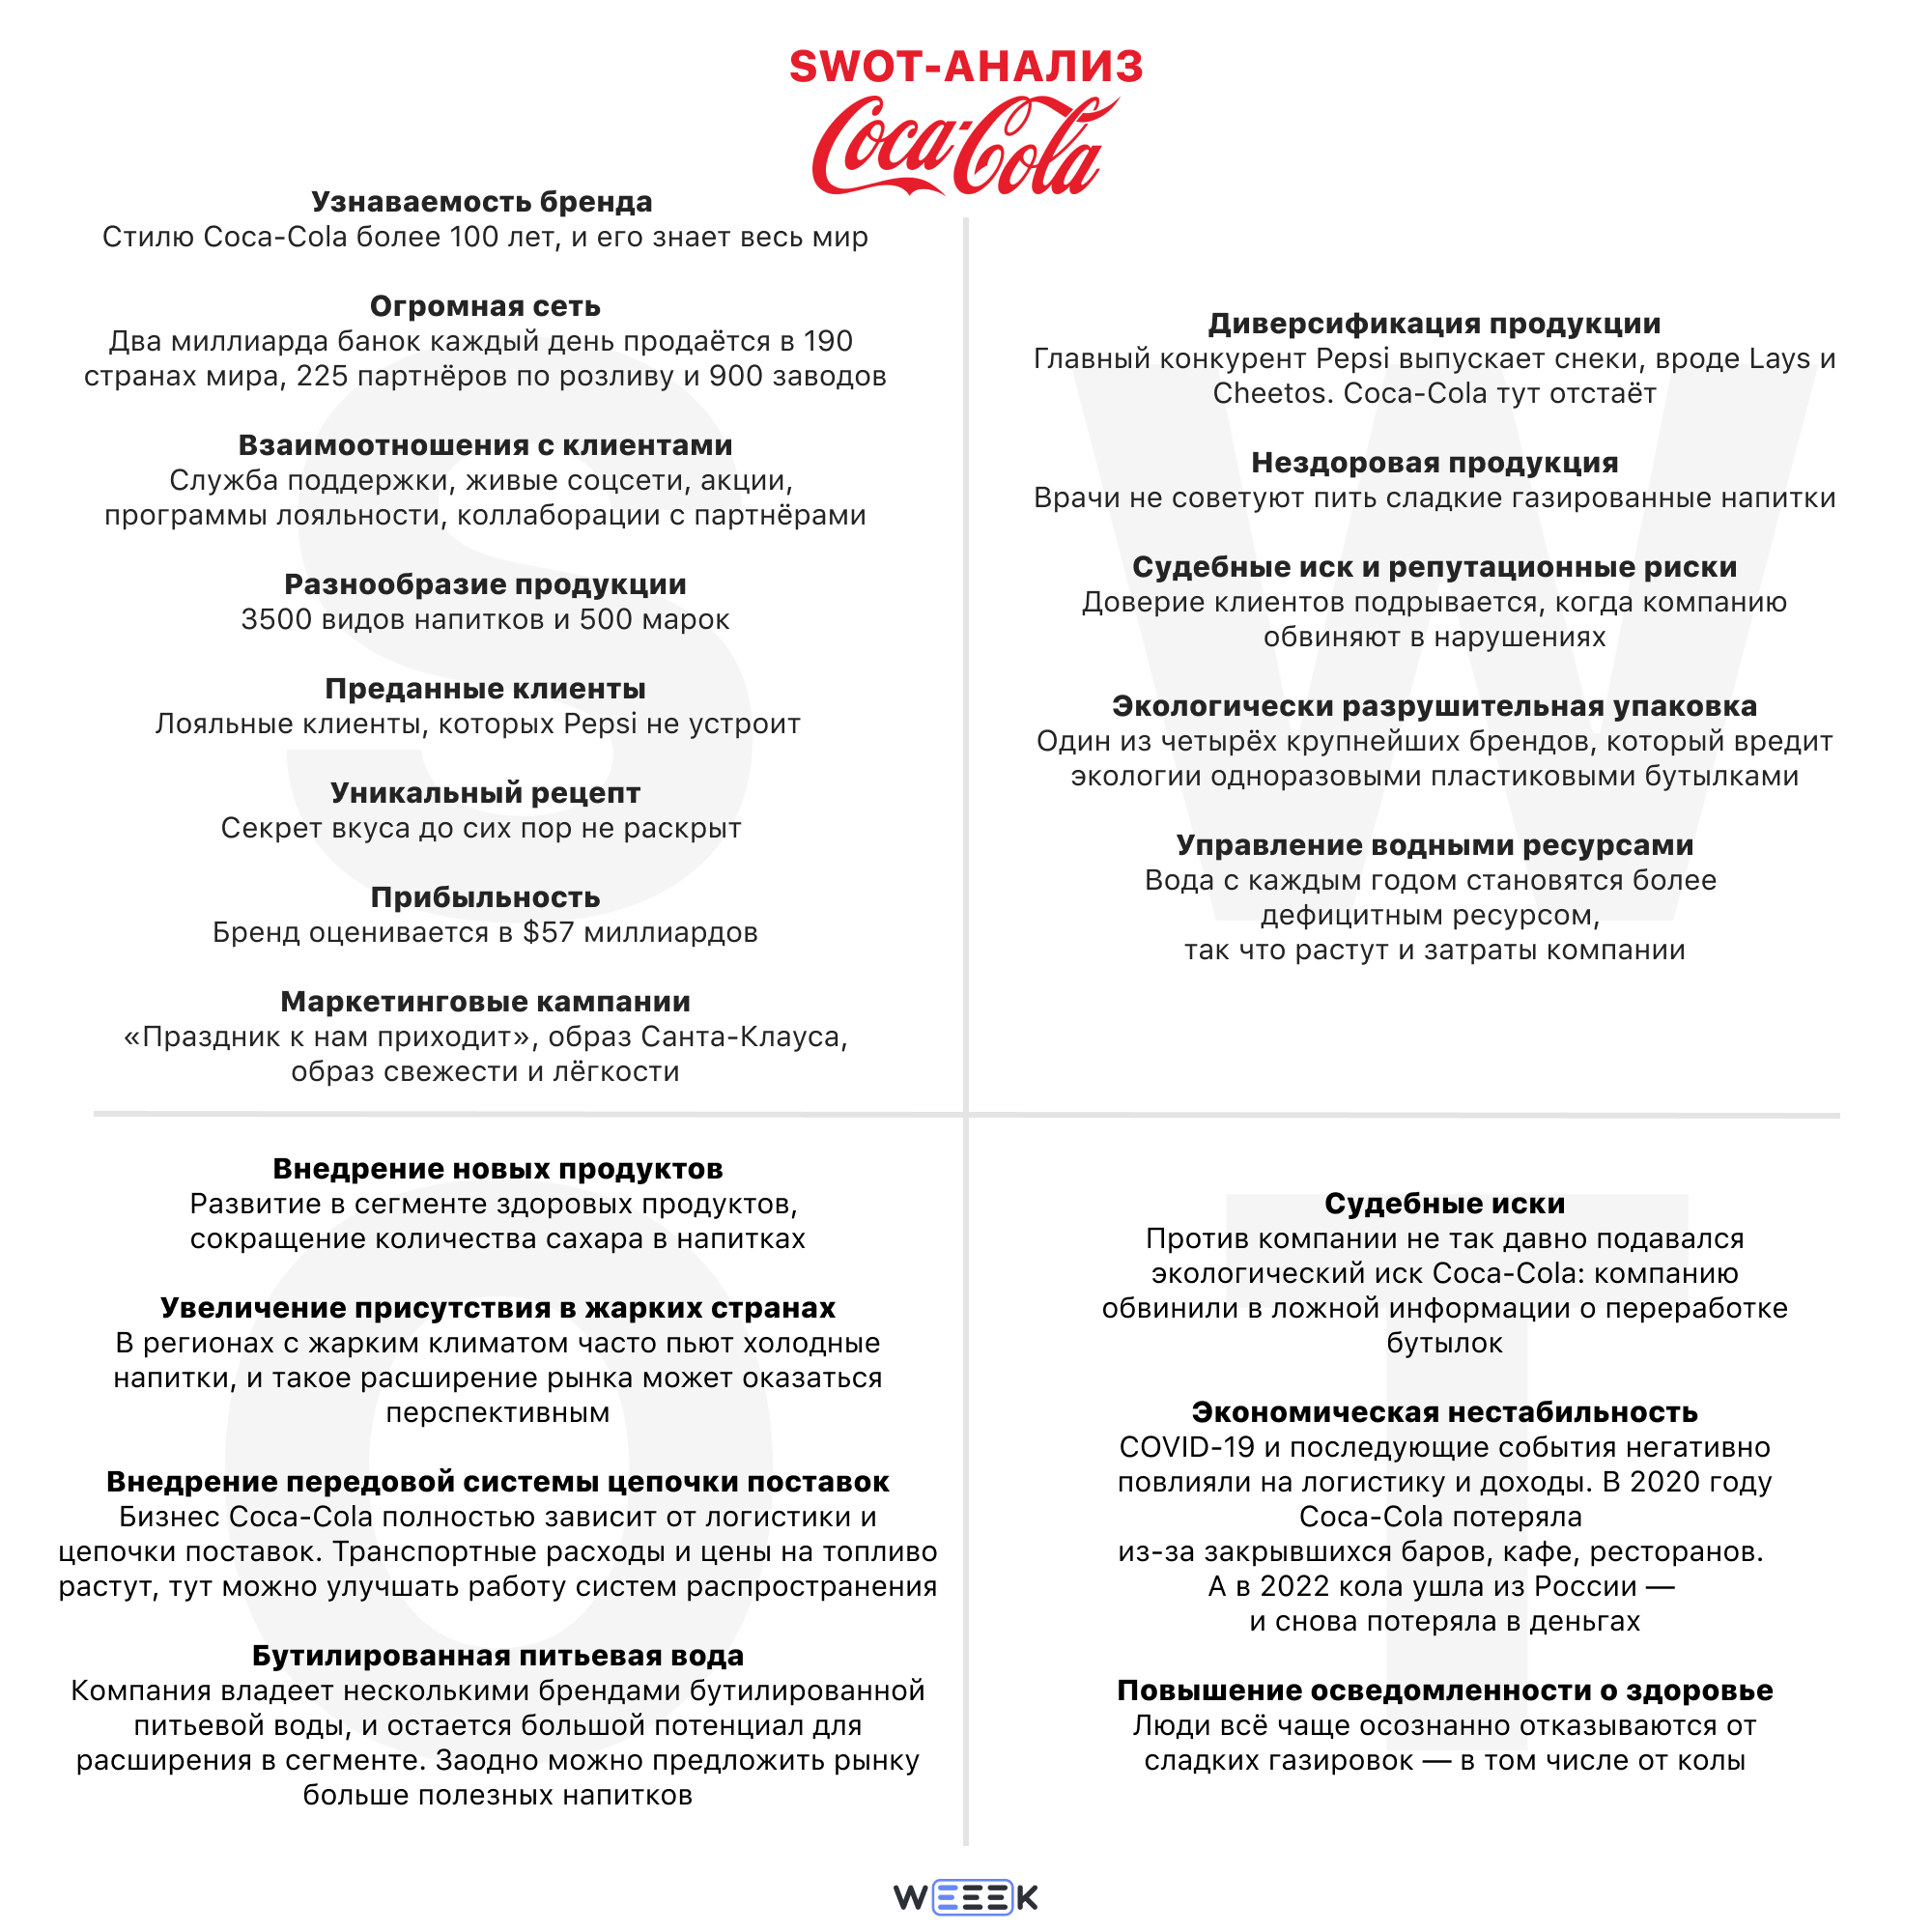 SWOT-анализ Coca-Cola